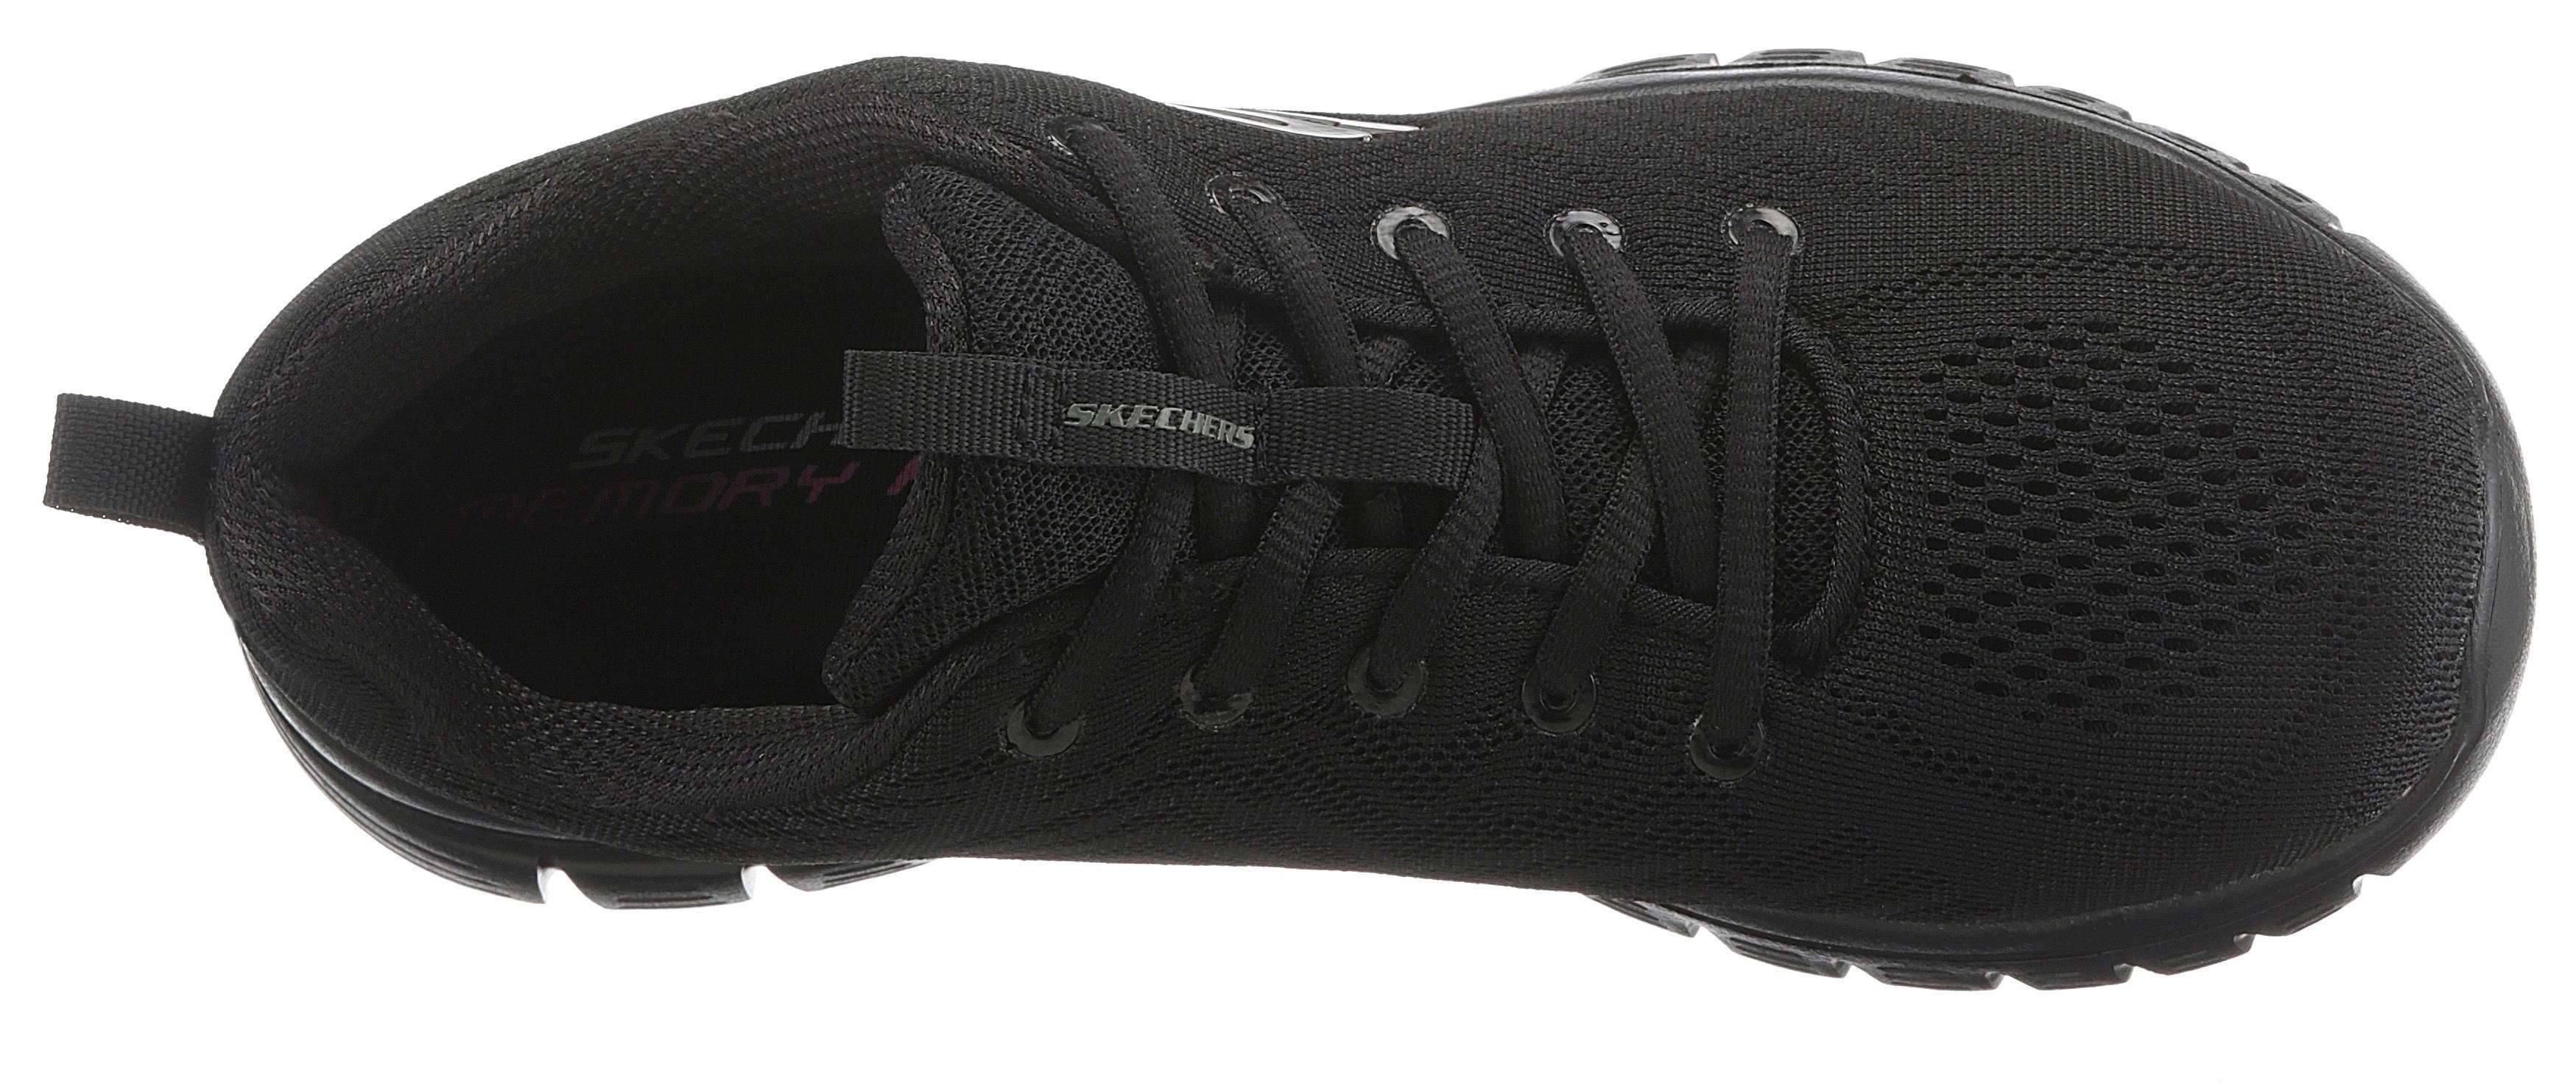 Graceful Memory Foam Connected durch Sneaker Get schwarz Skechers Dämpfung mit -